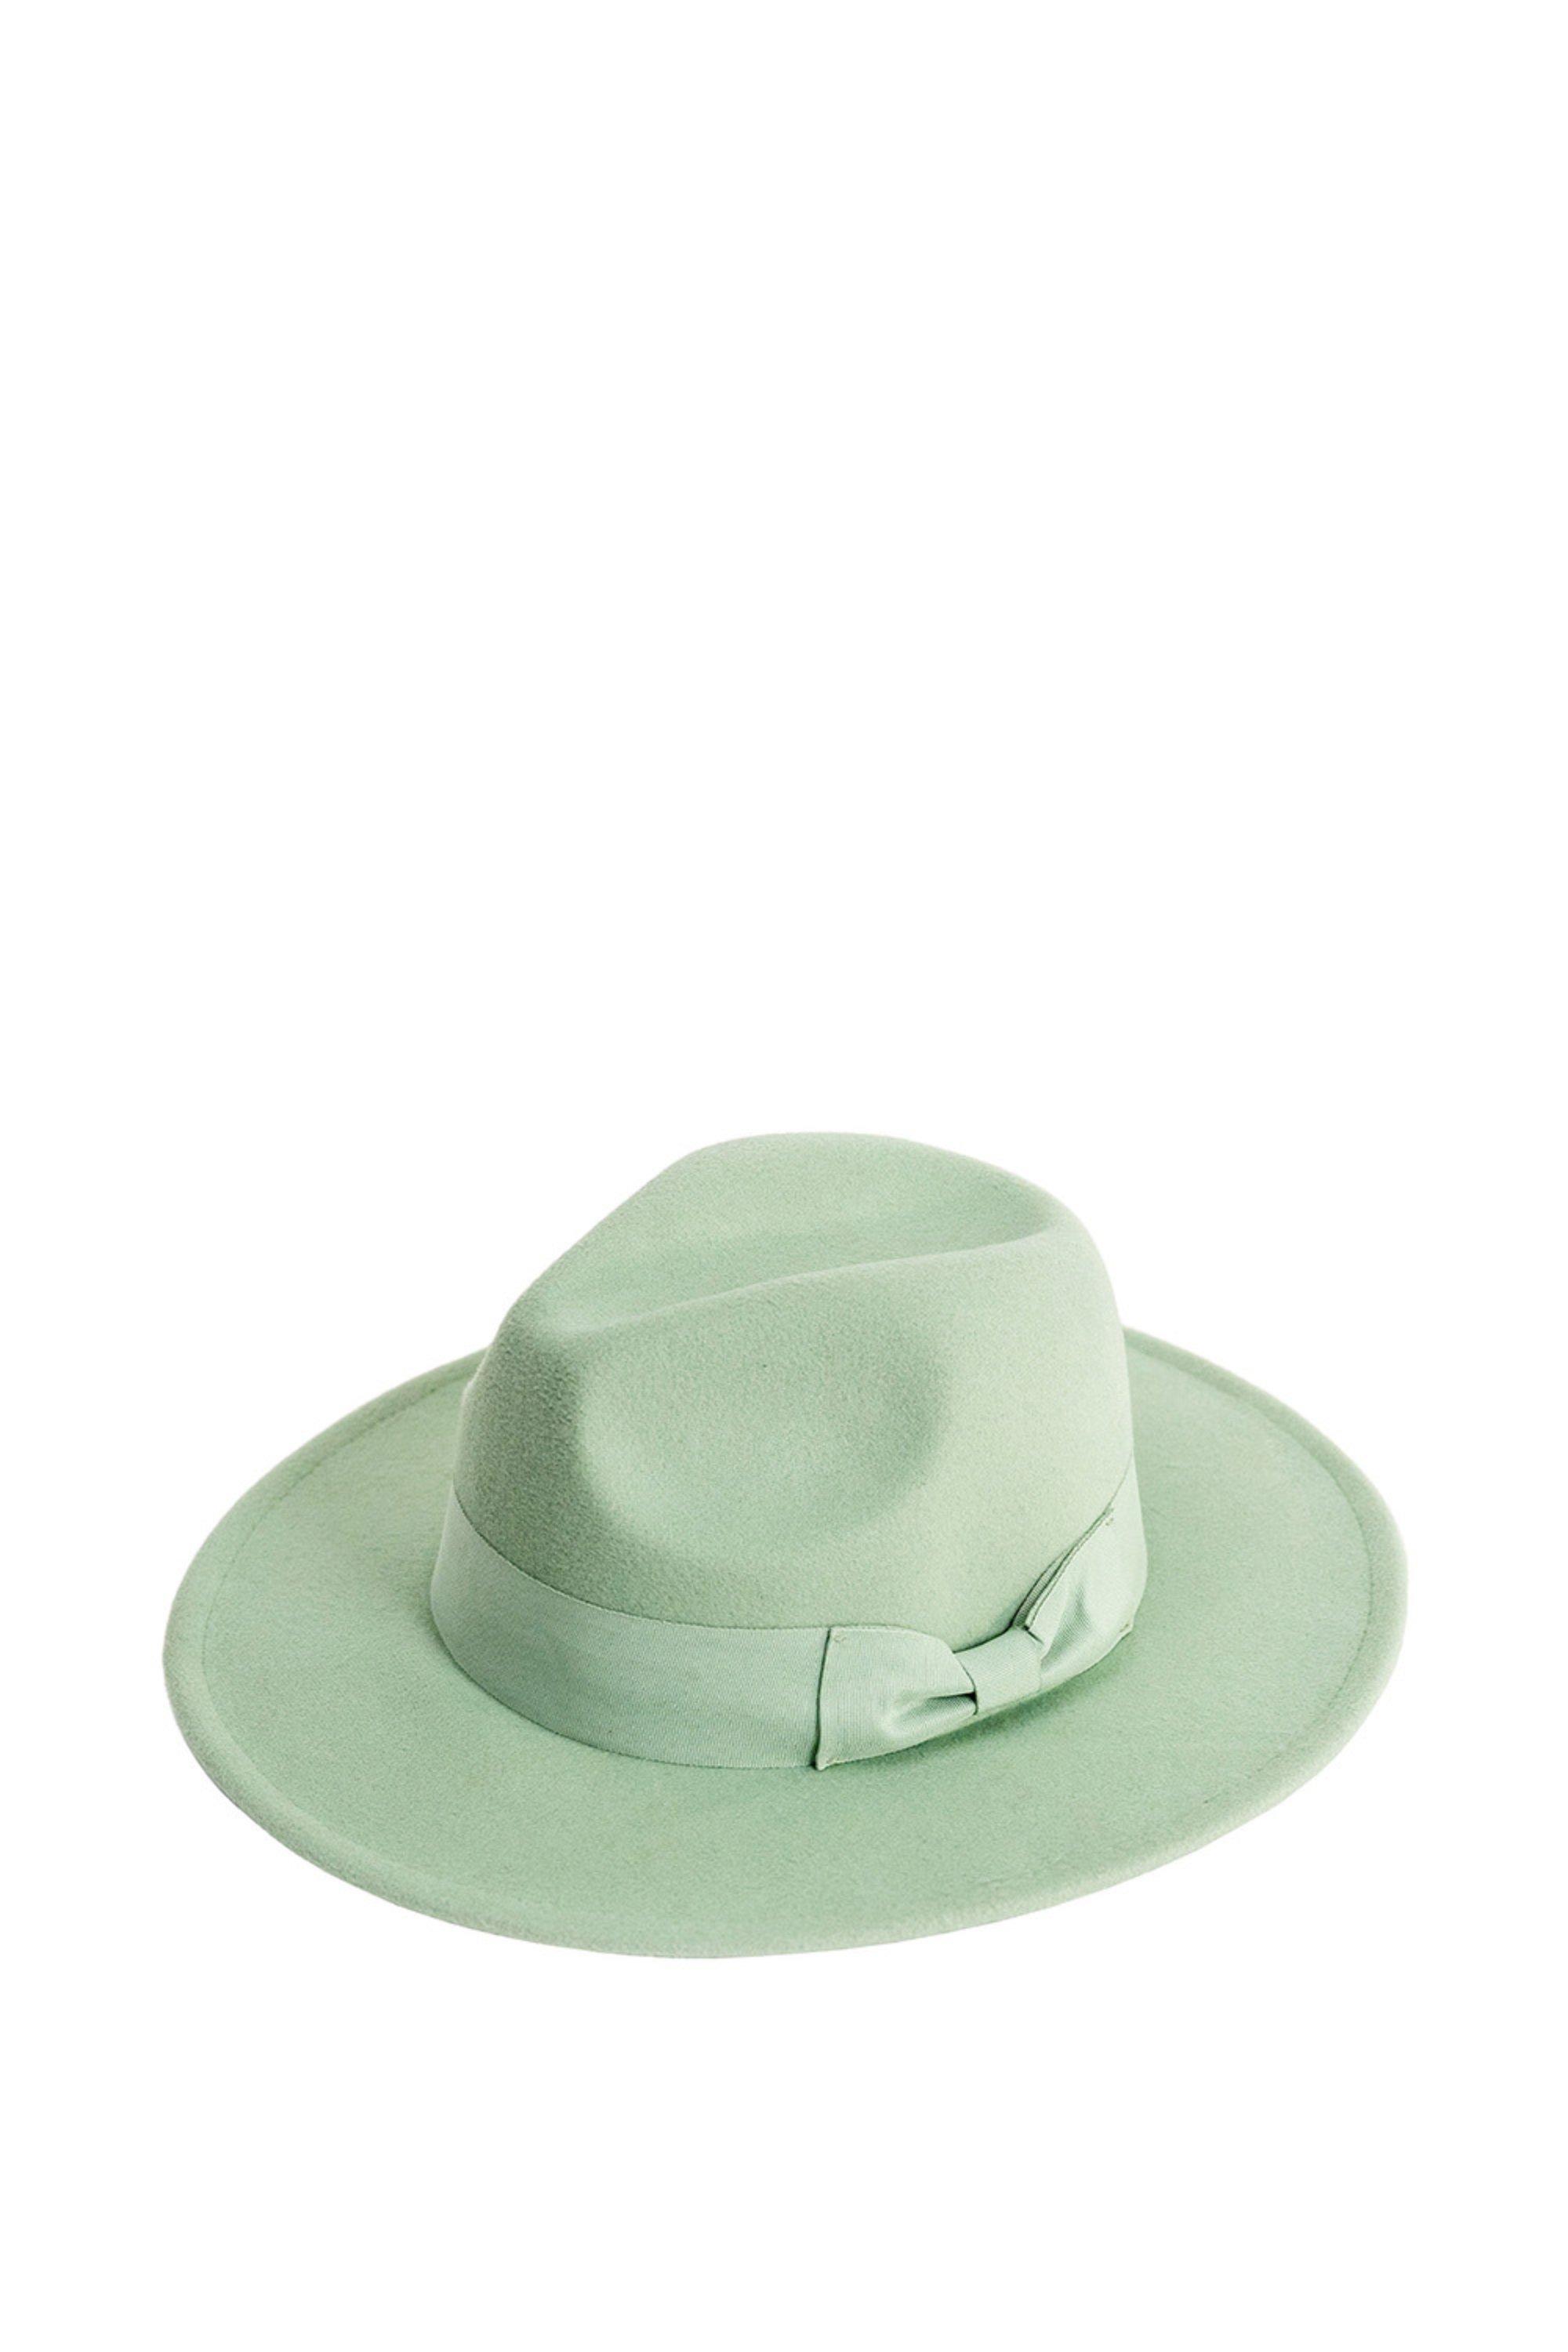 Регулируемая шляпа-федора с бантом My Accessories London, зеленый кепка с логотипом my accessories london бежевый